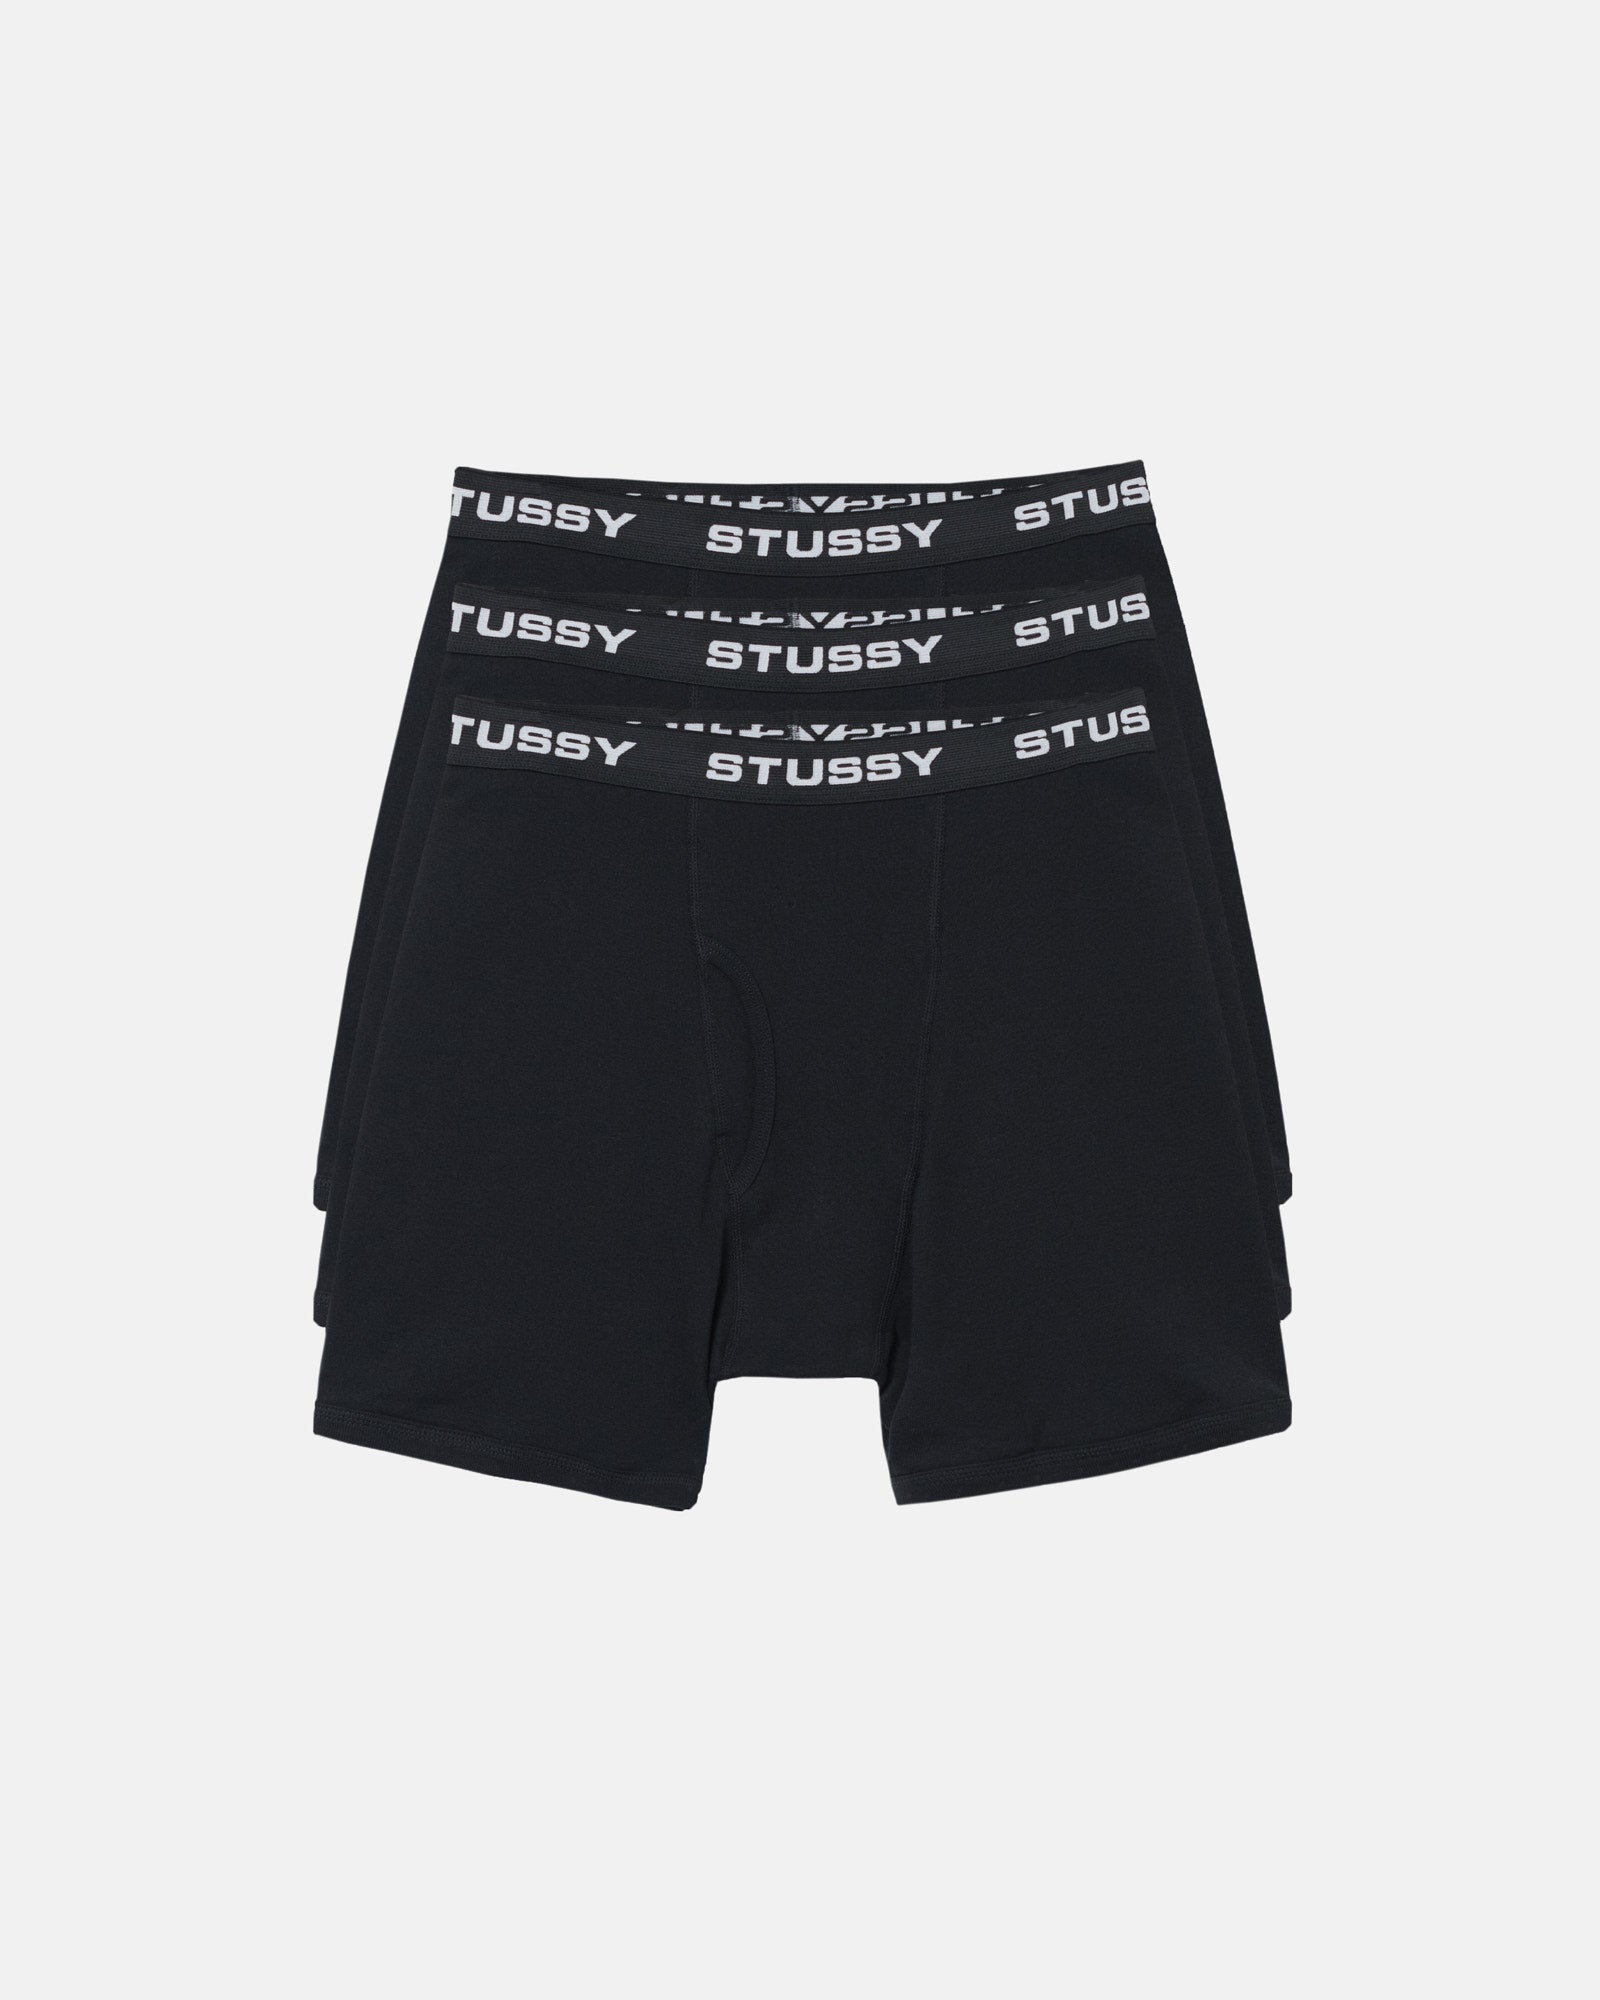 Stüssy Boxer Briefs in black – Stüssy